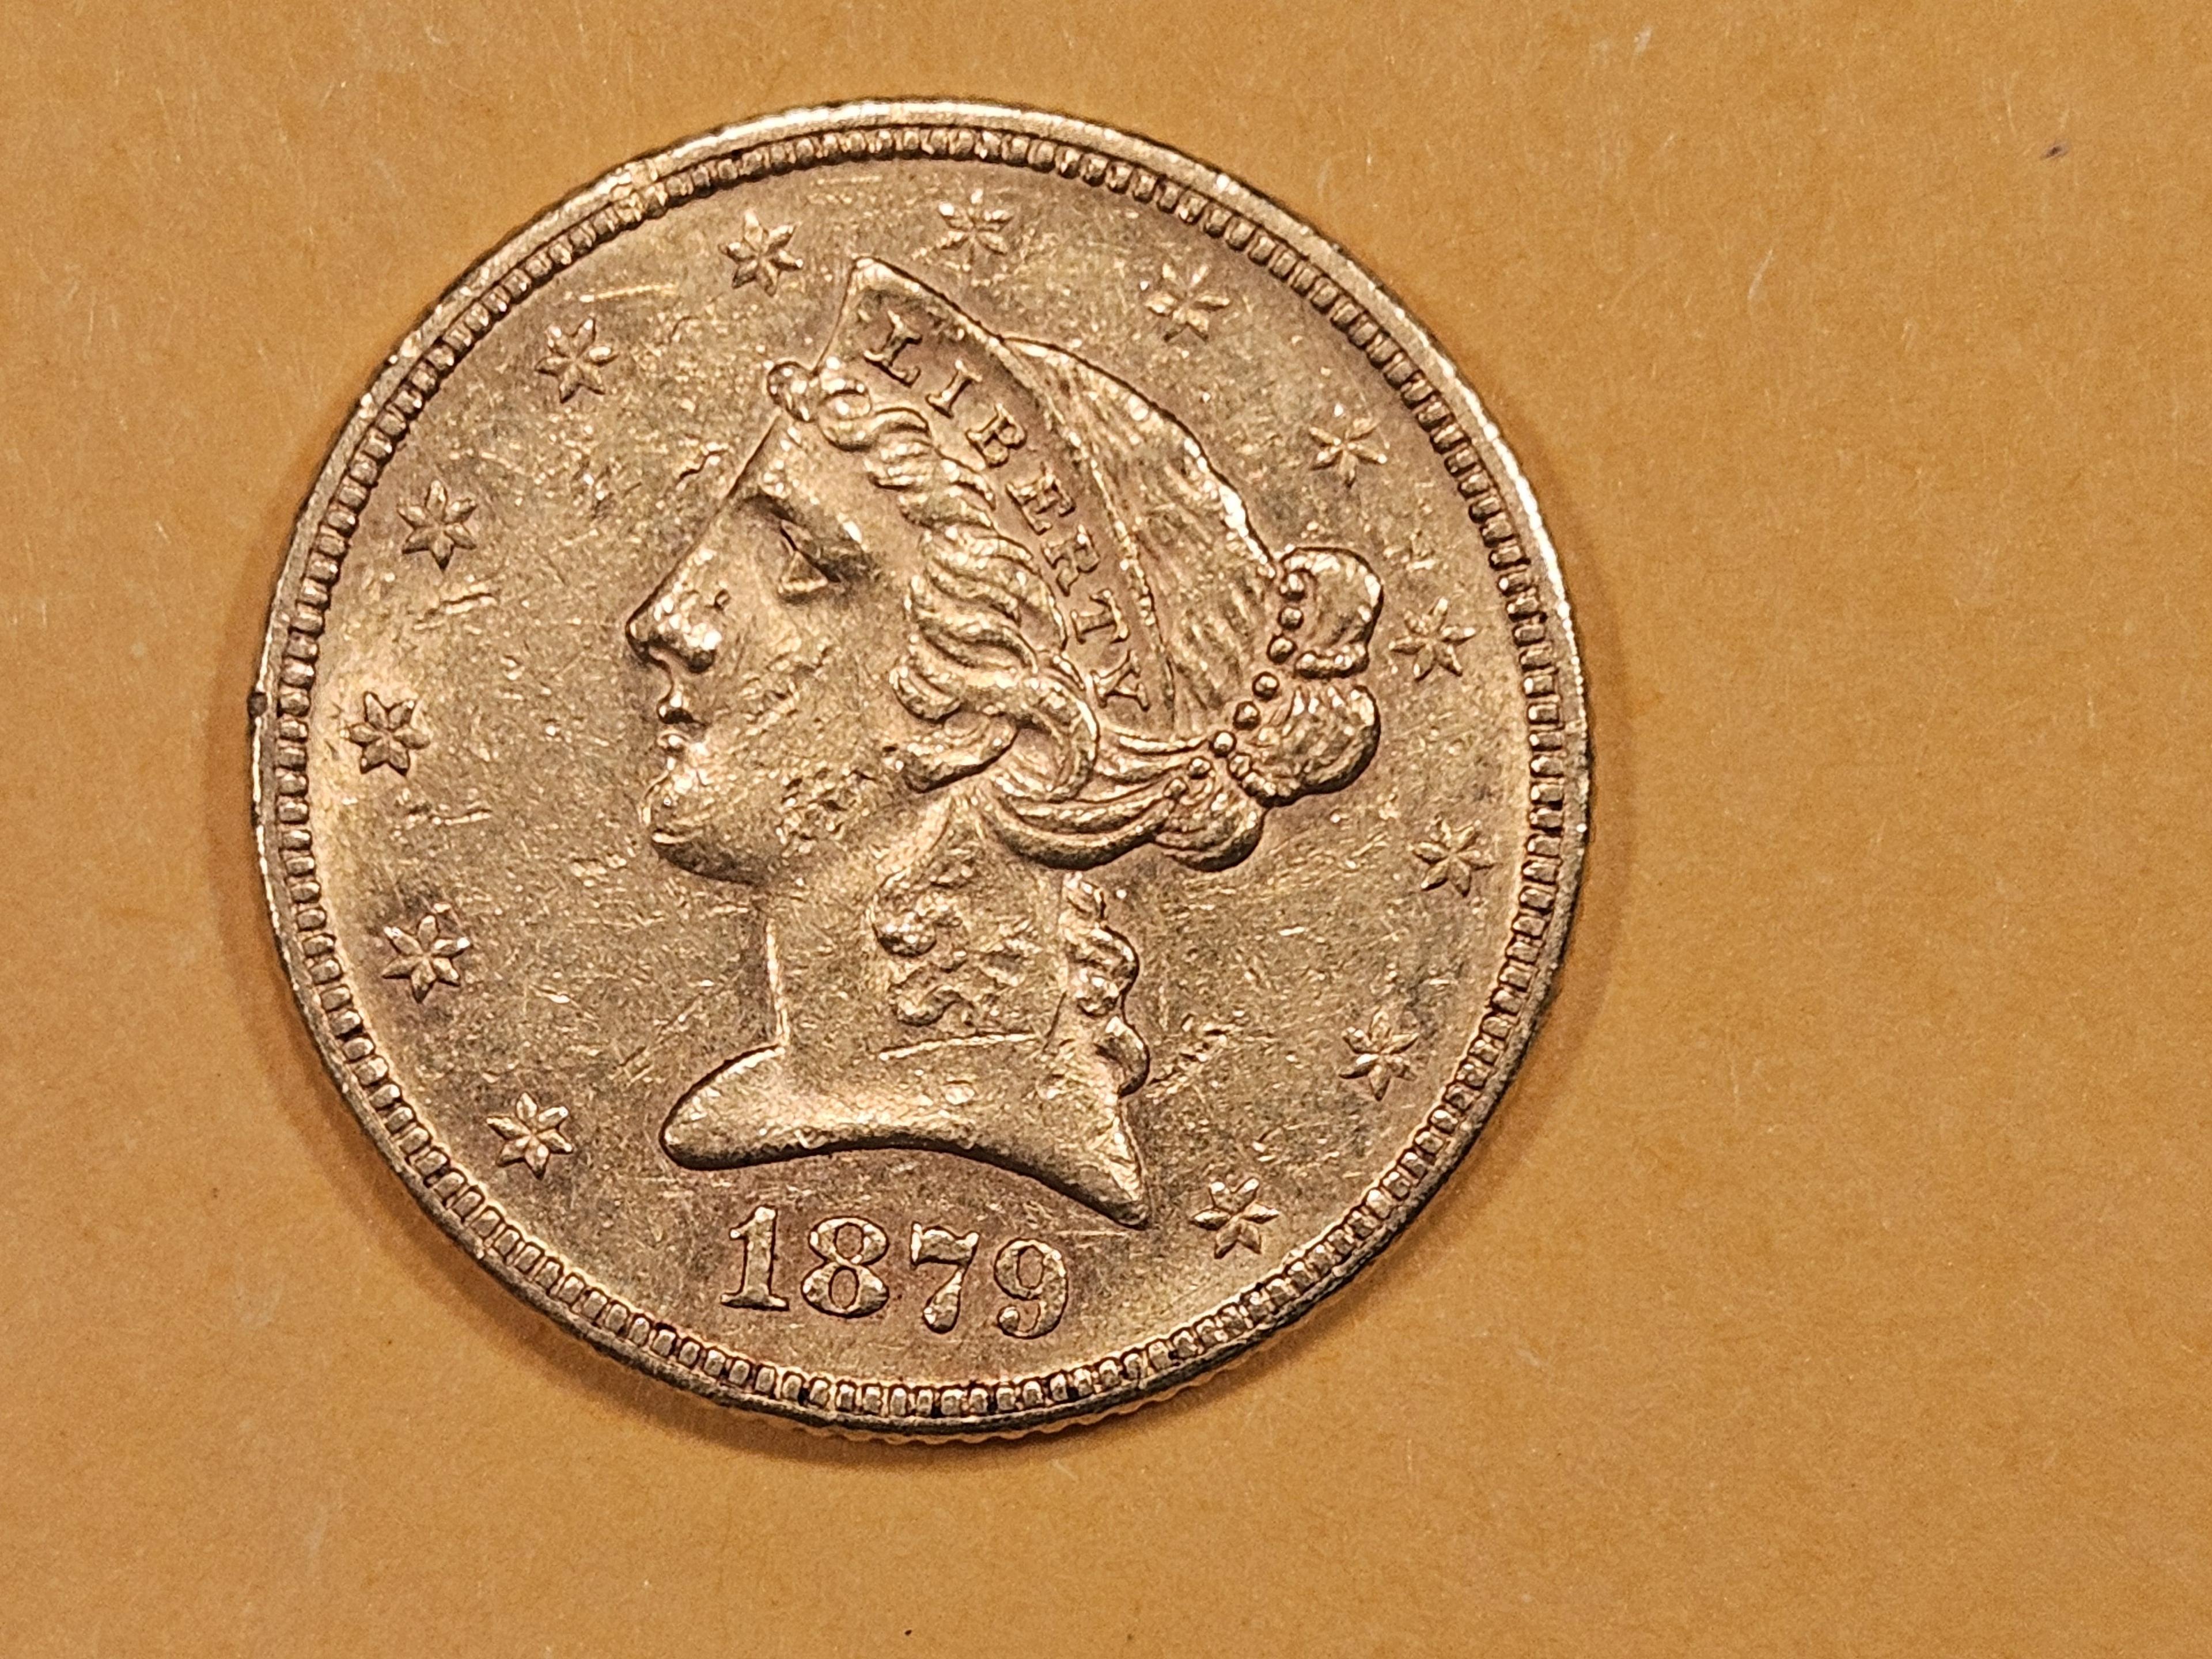 GOLD! Brilliant Uncirculated 1879 Liberty Head Gold $5 Half-Eagle